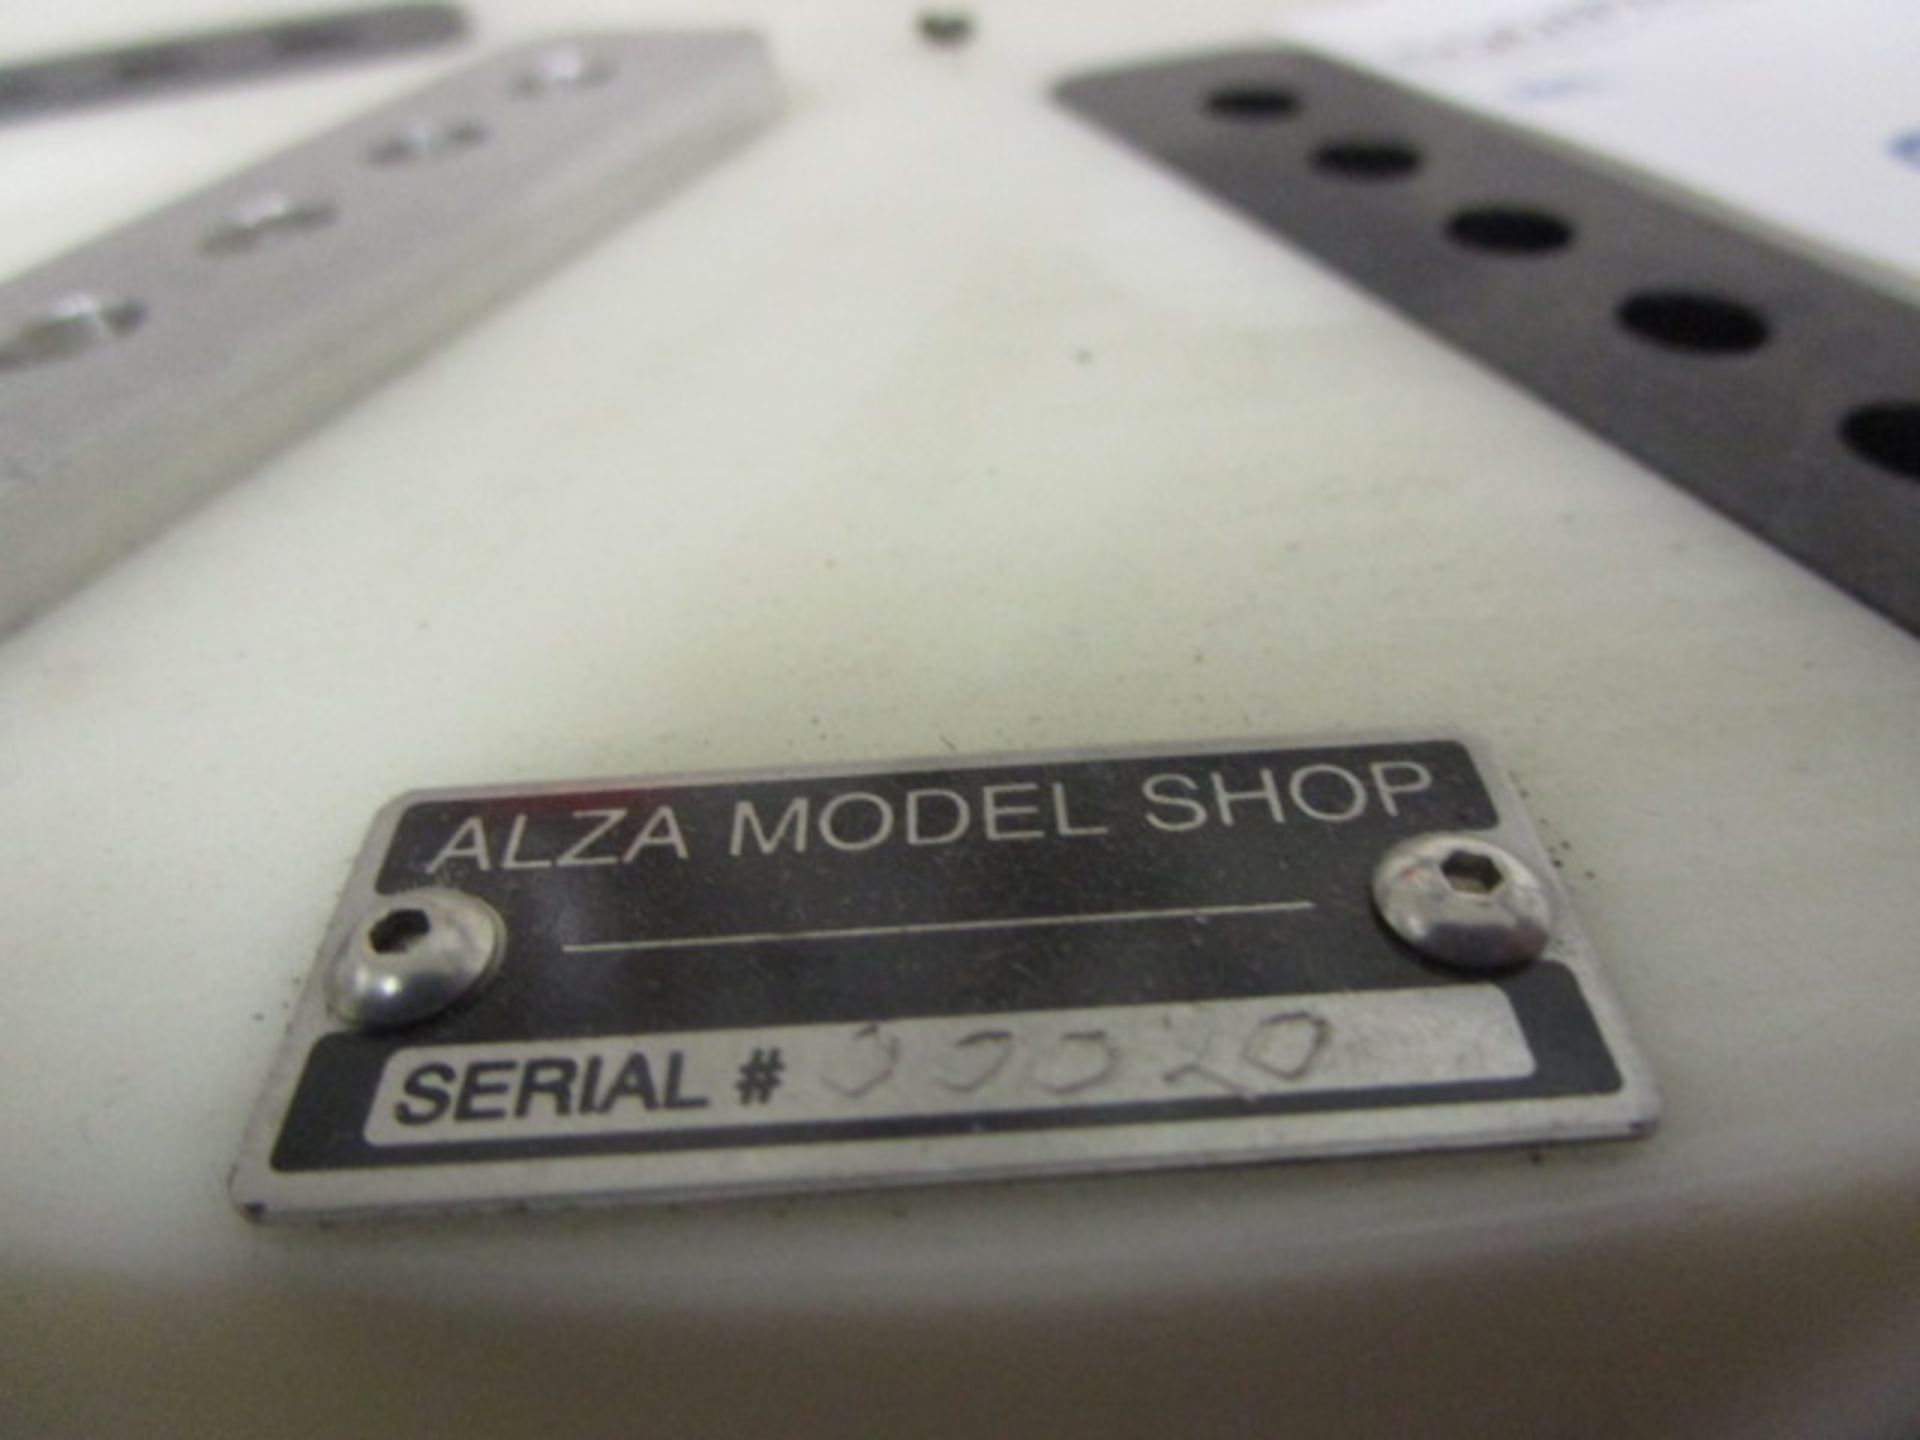 AIZA model shop - Image 2 of 4